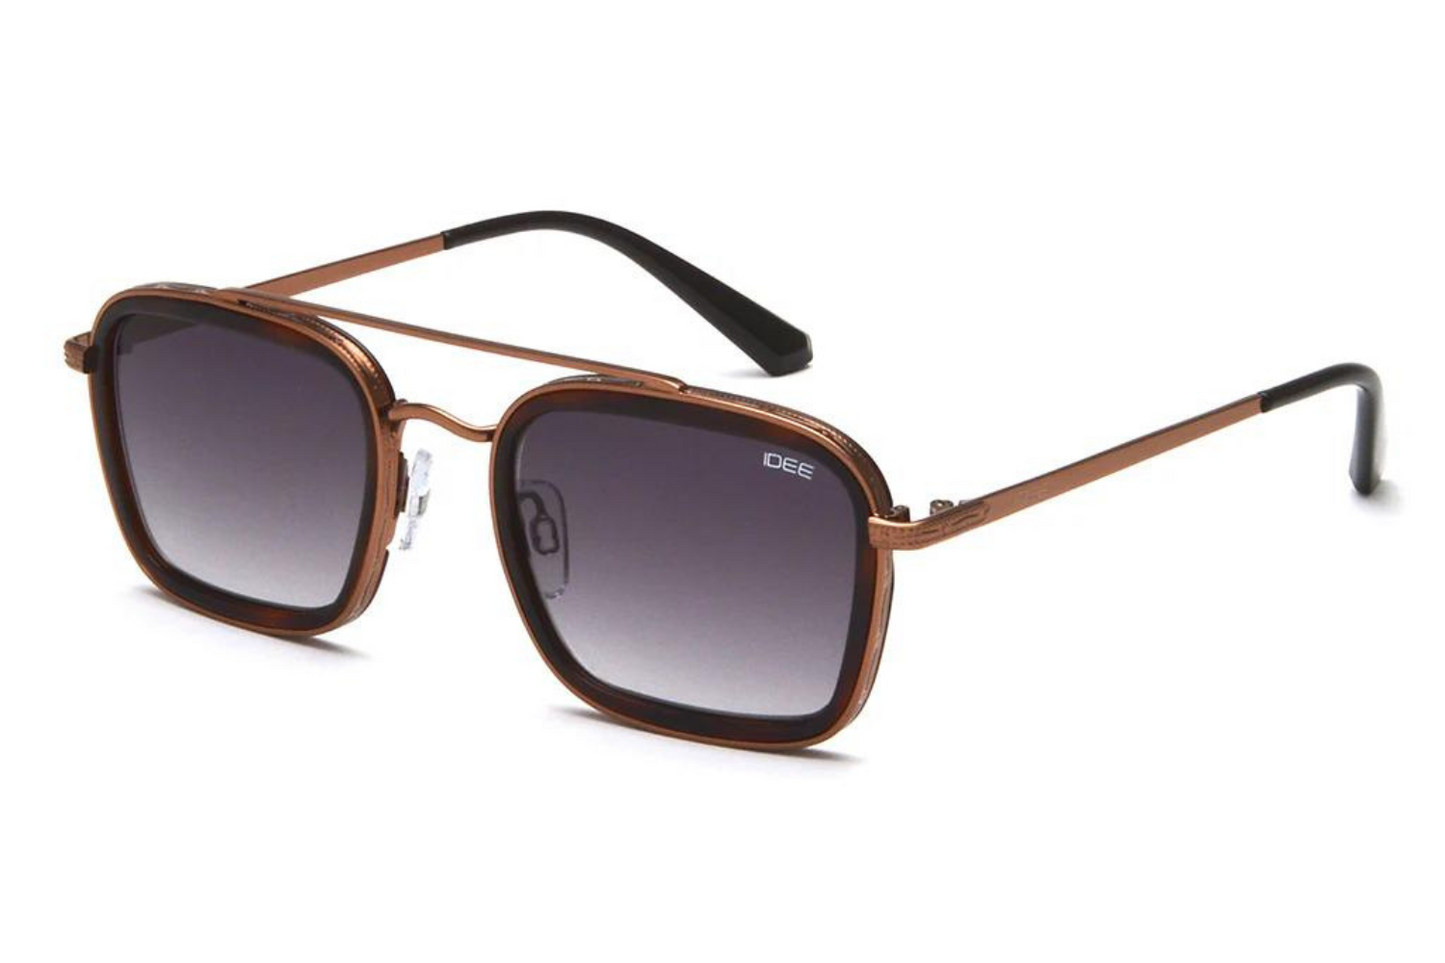 IDEE Sunglasses S3096